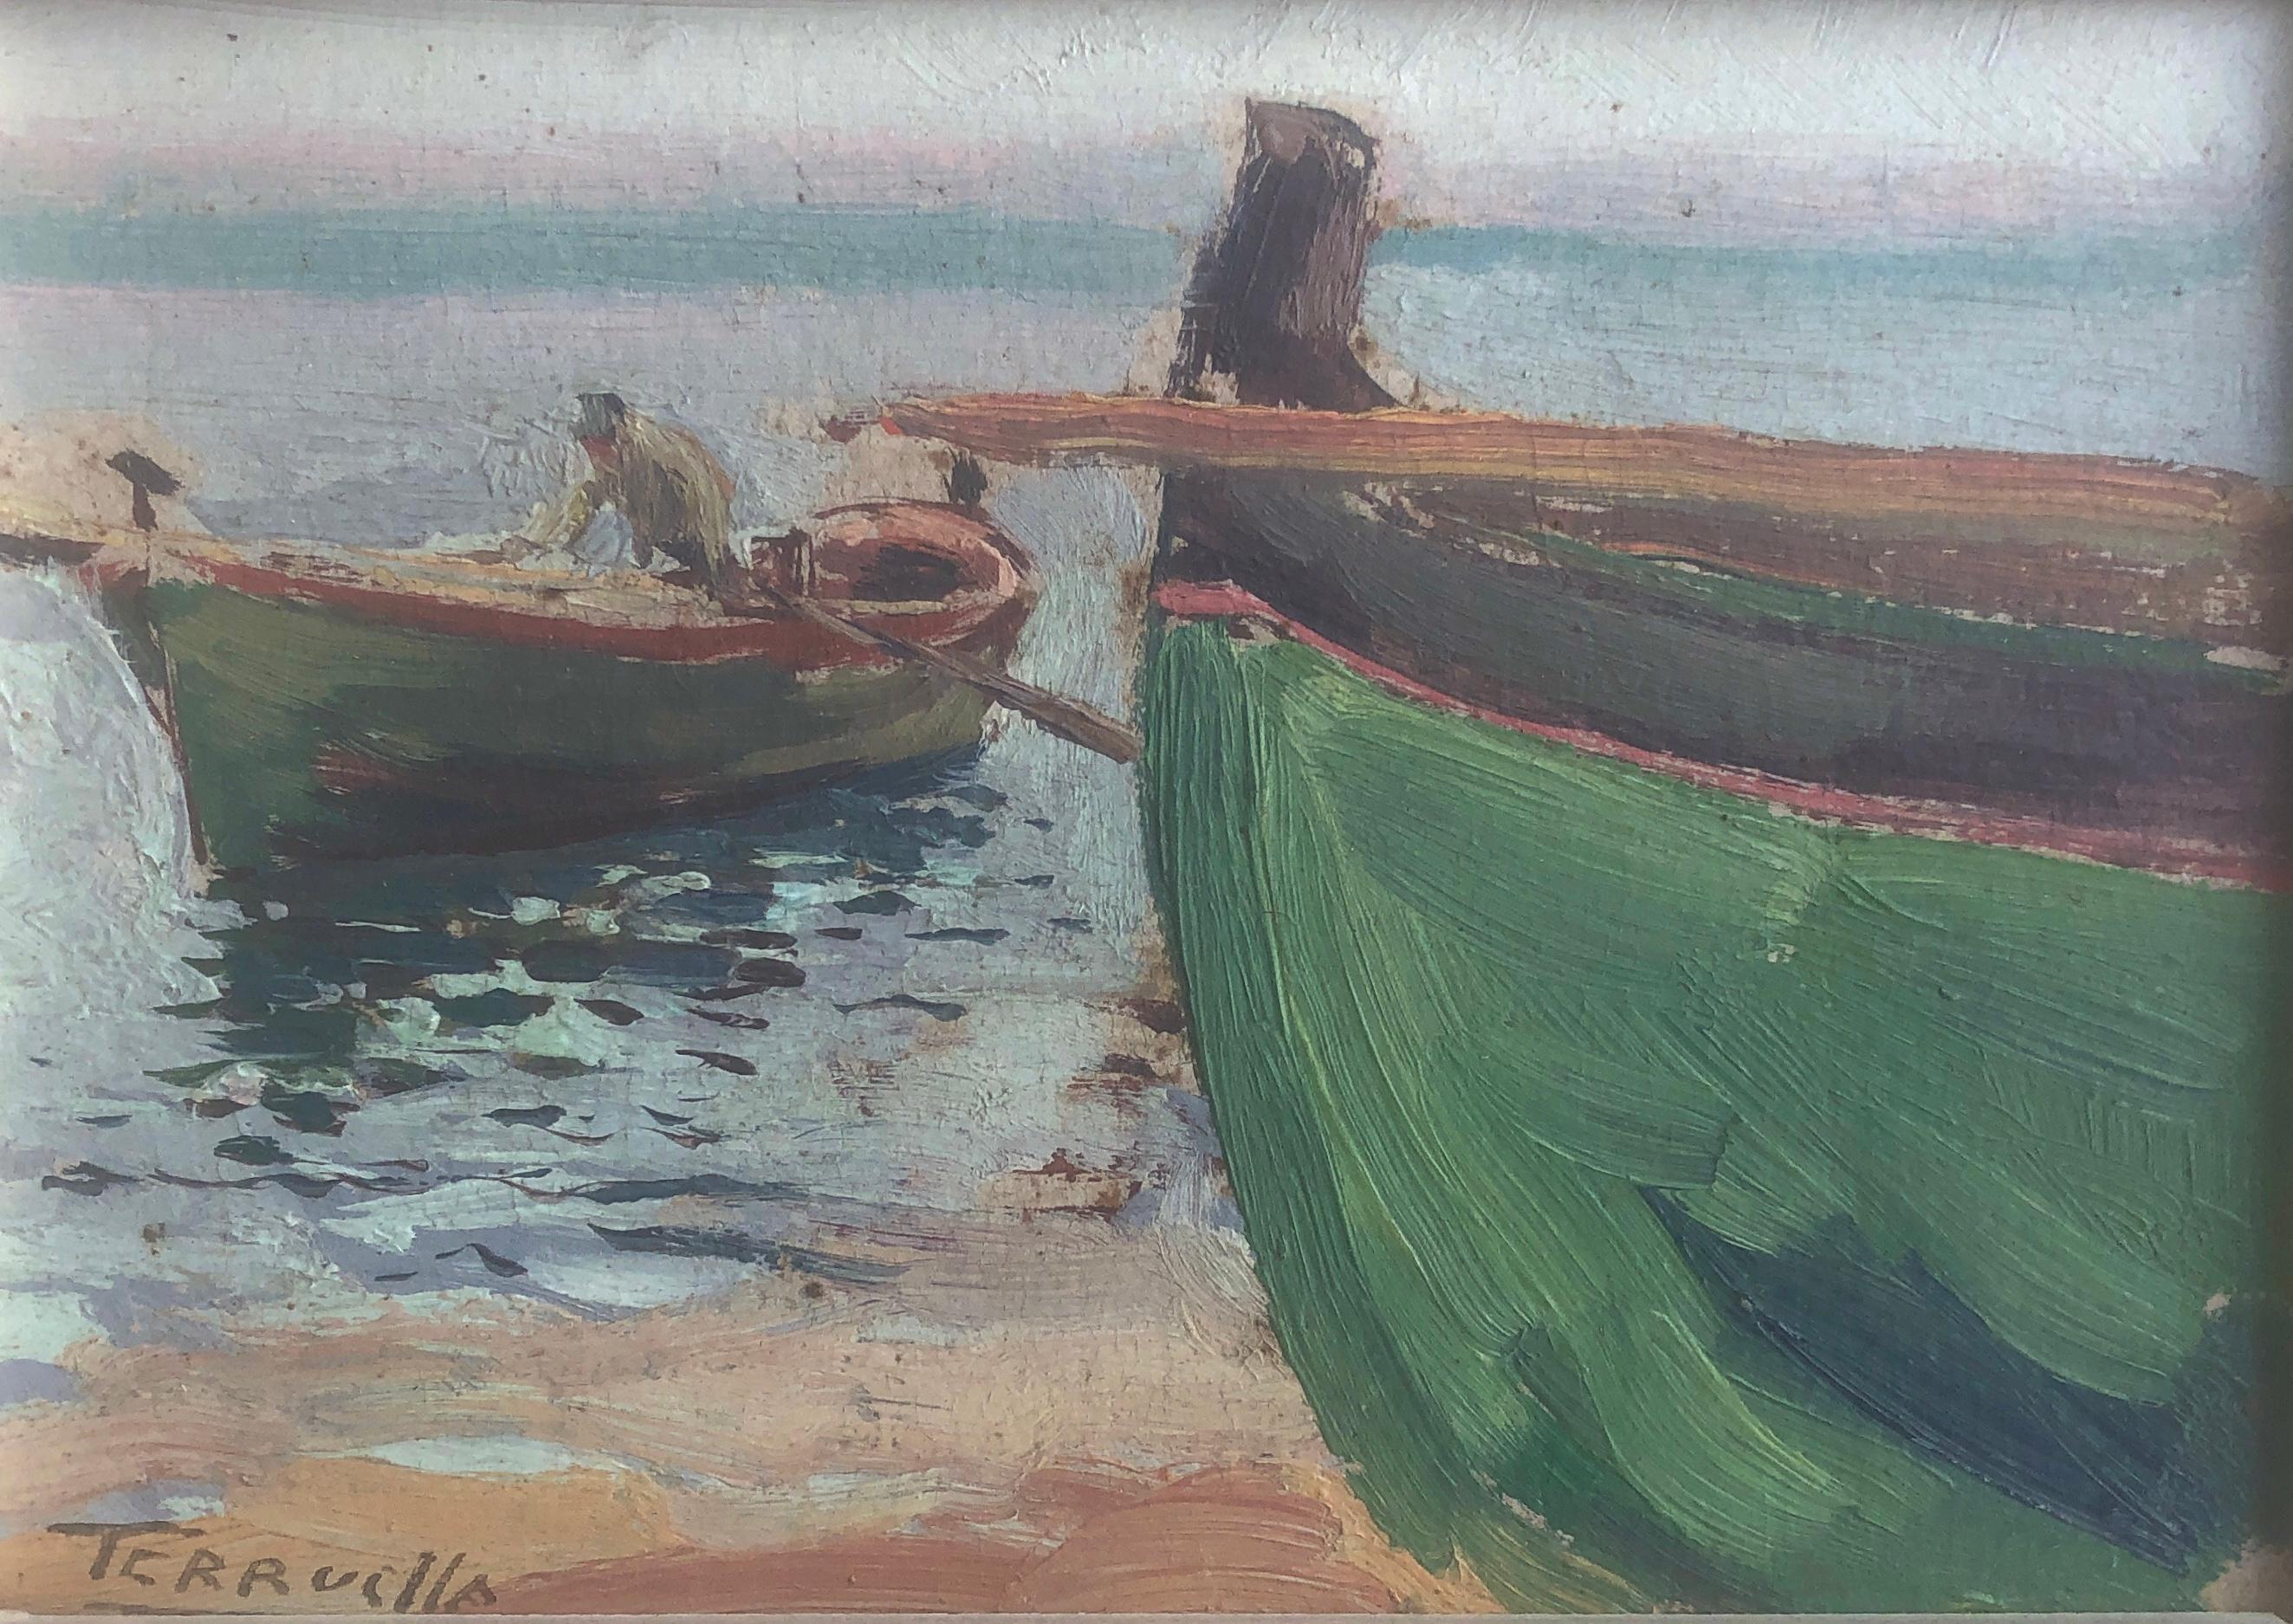 Joaquin Terruella Matilla Figurative Painting - Boats on the beach oil on cardboard painting impressionism spanish seascape